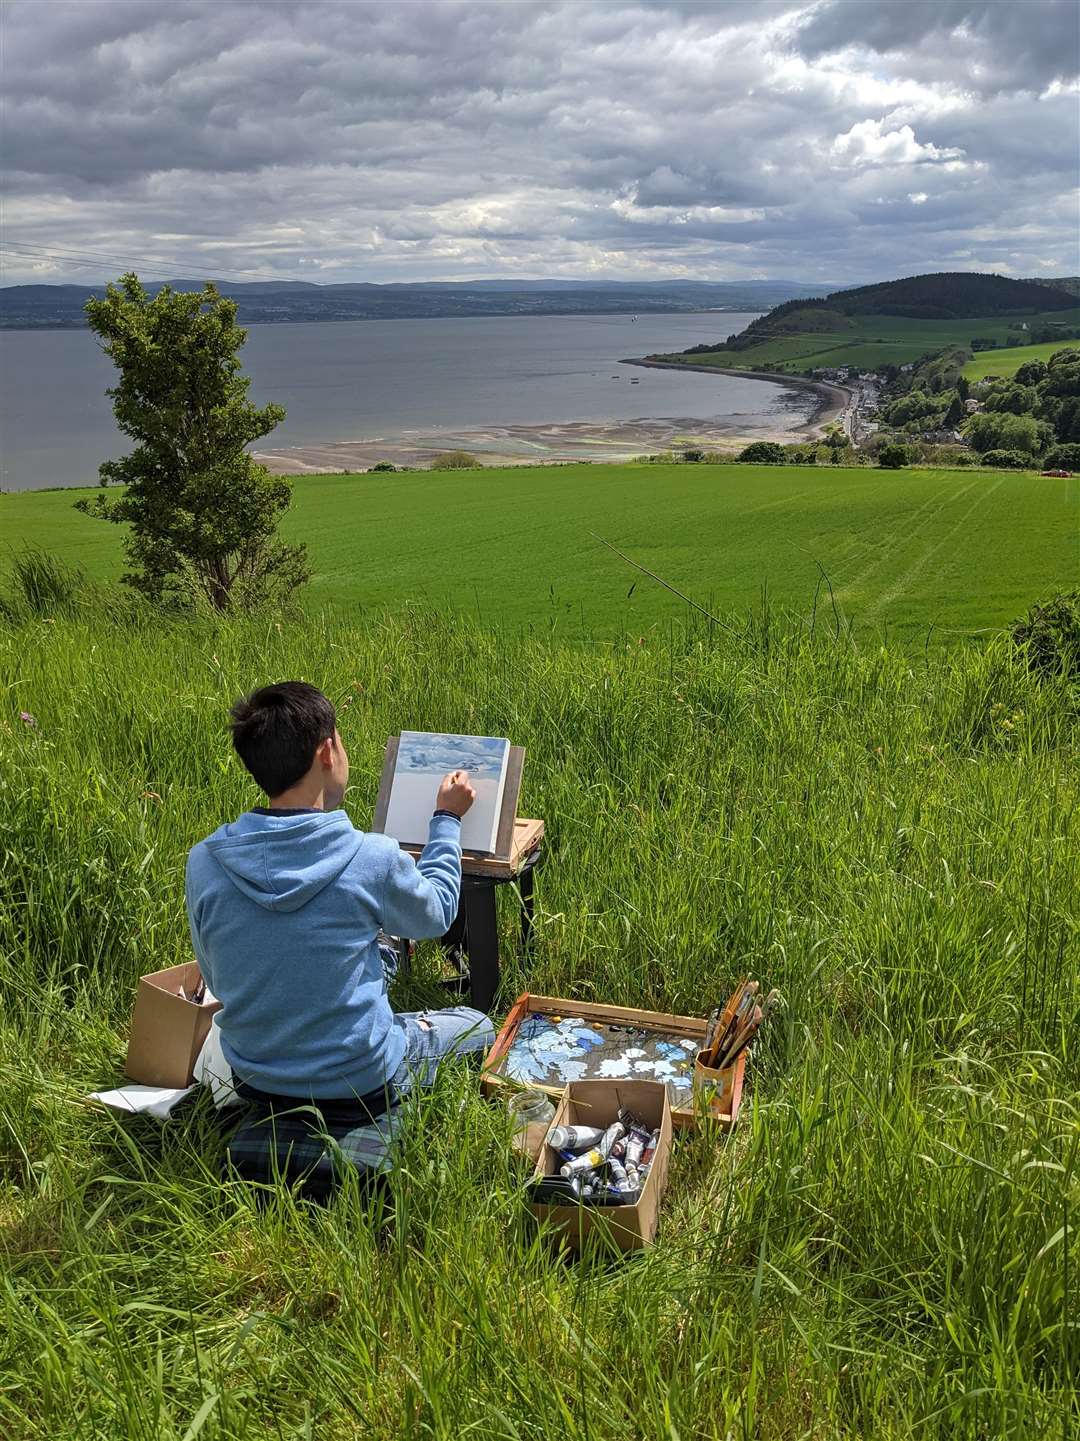 Tuan Nguyen paints a landscape near his home on the Black Island.